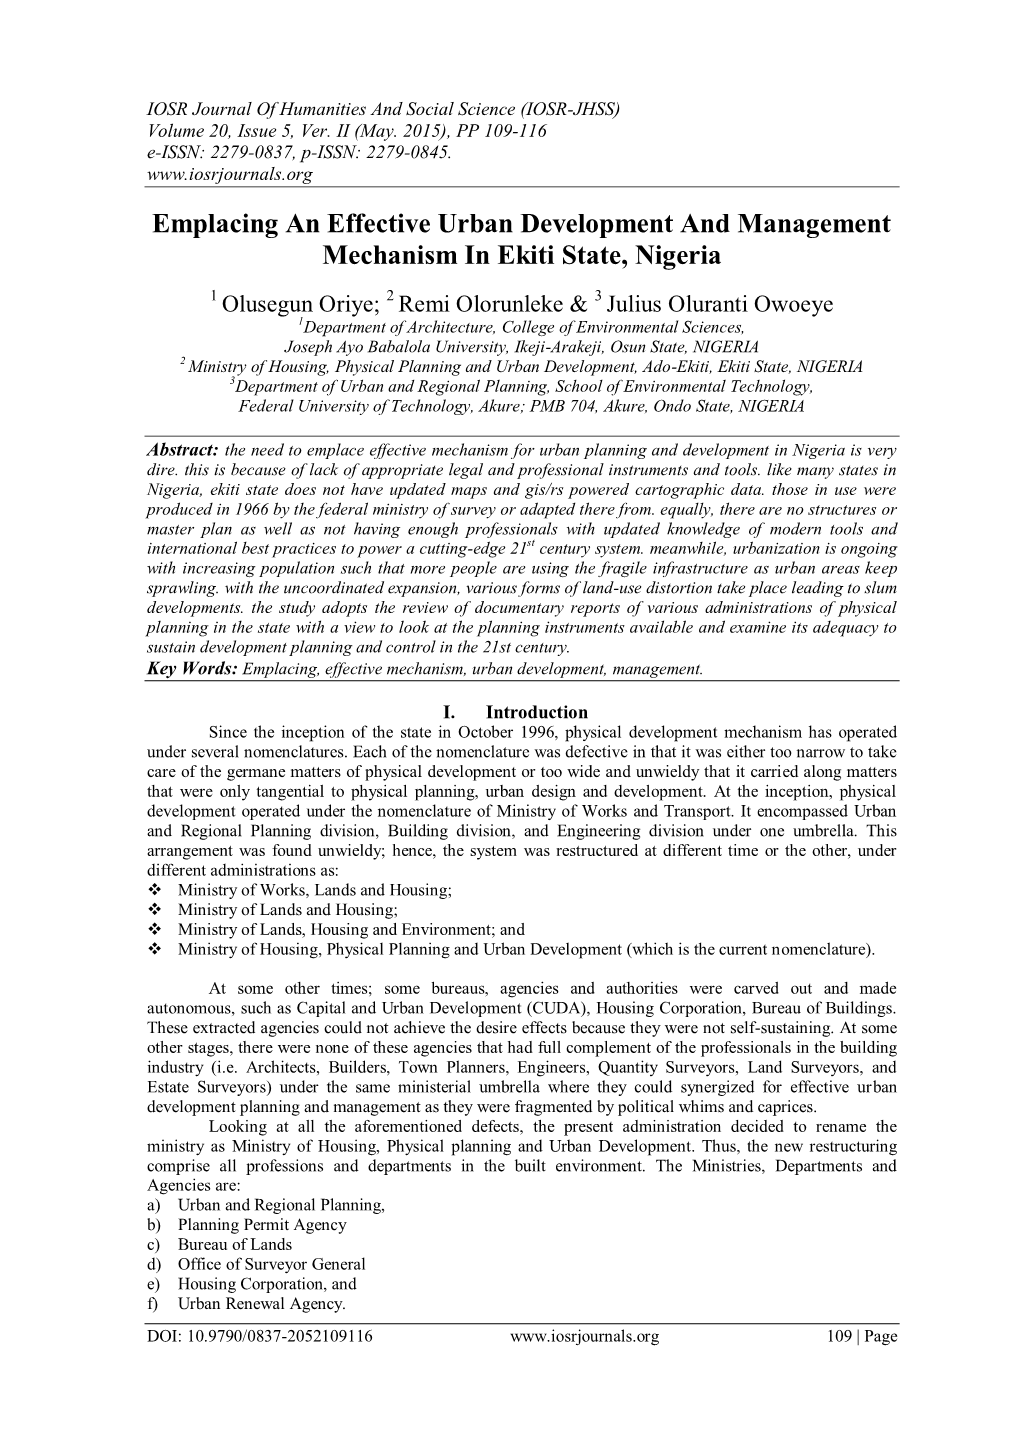 Emplacing an Effective Urban Development and Management Mechanism in Ekiti State, Nigeria